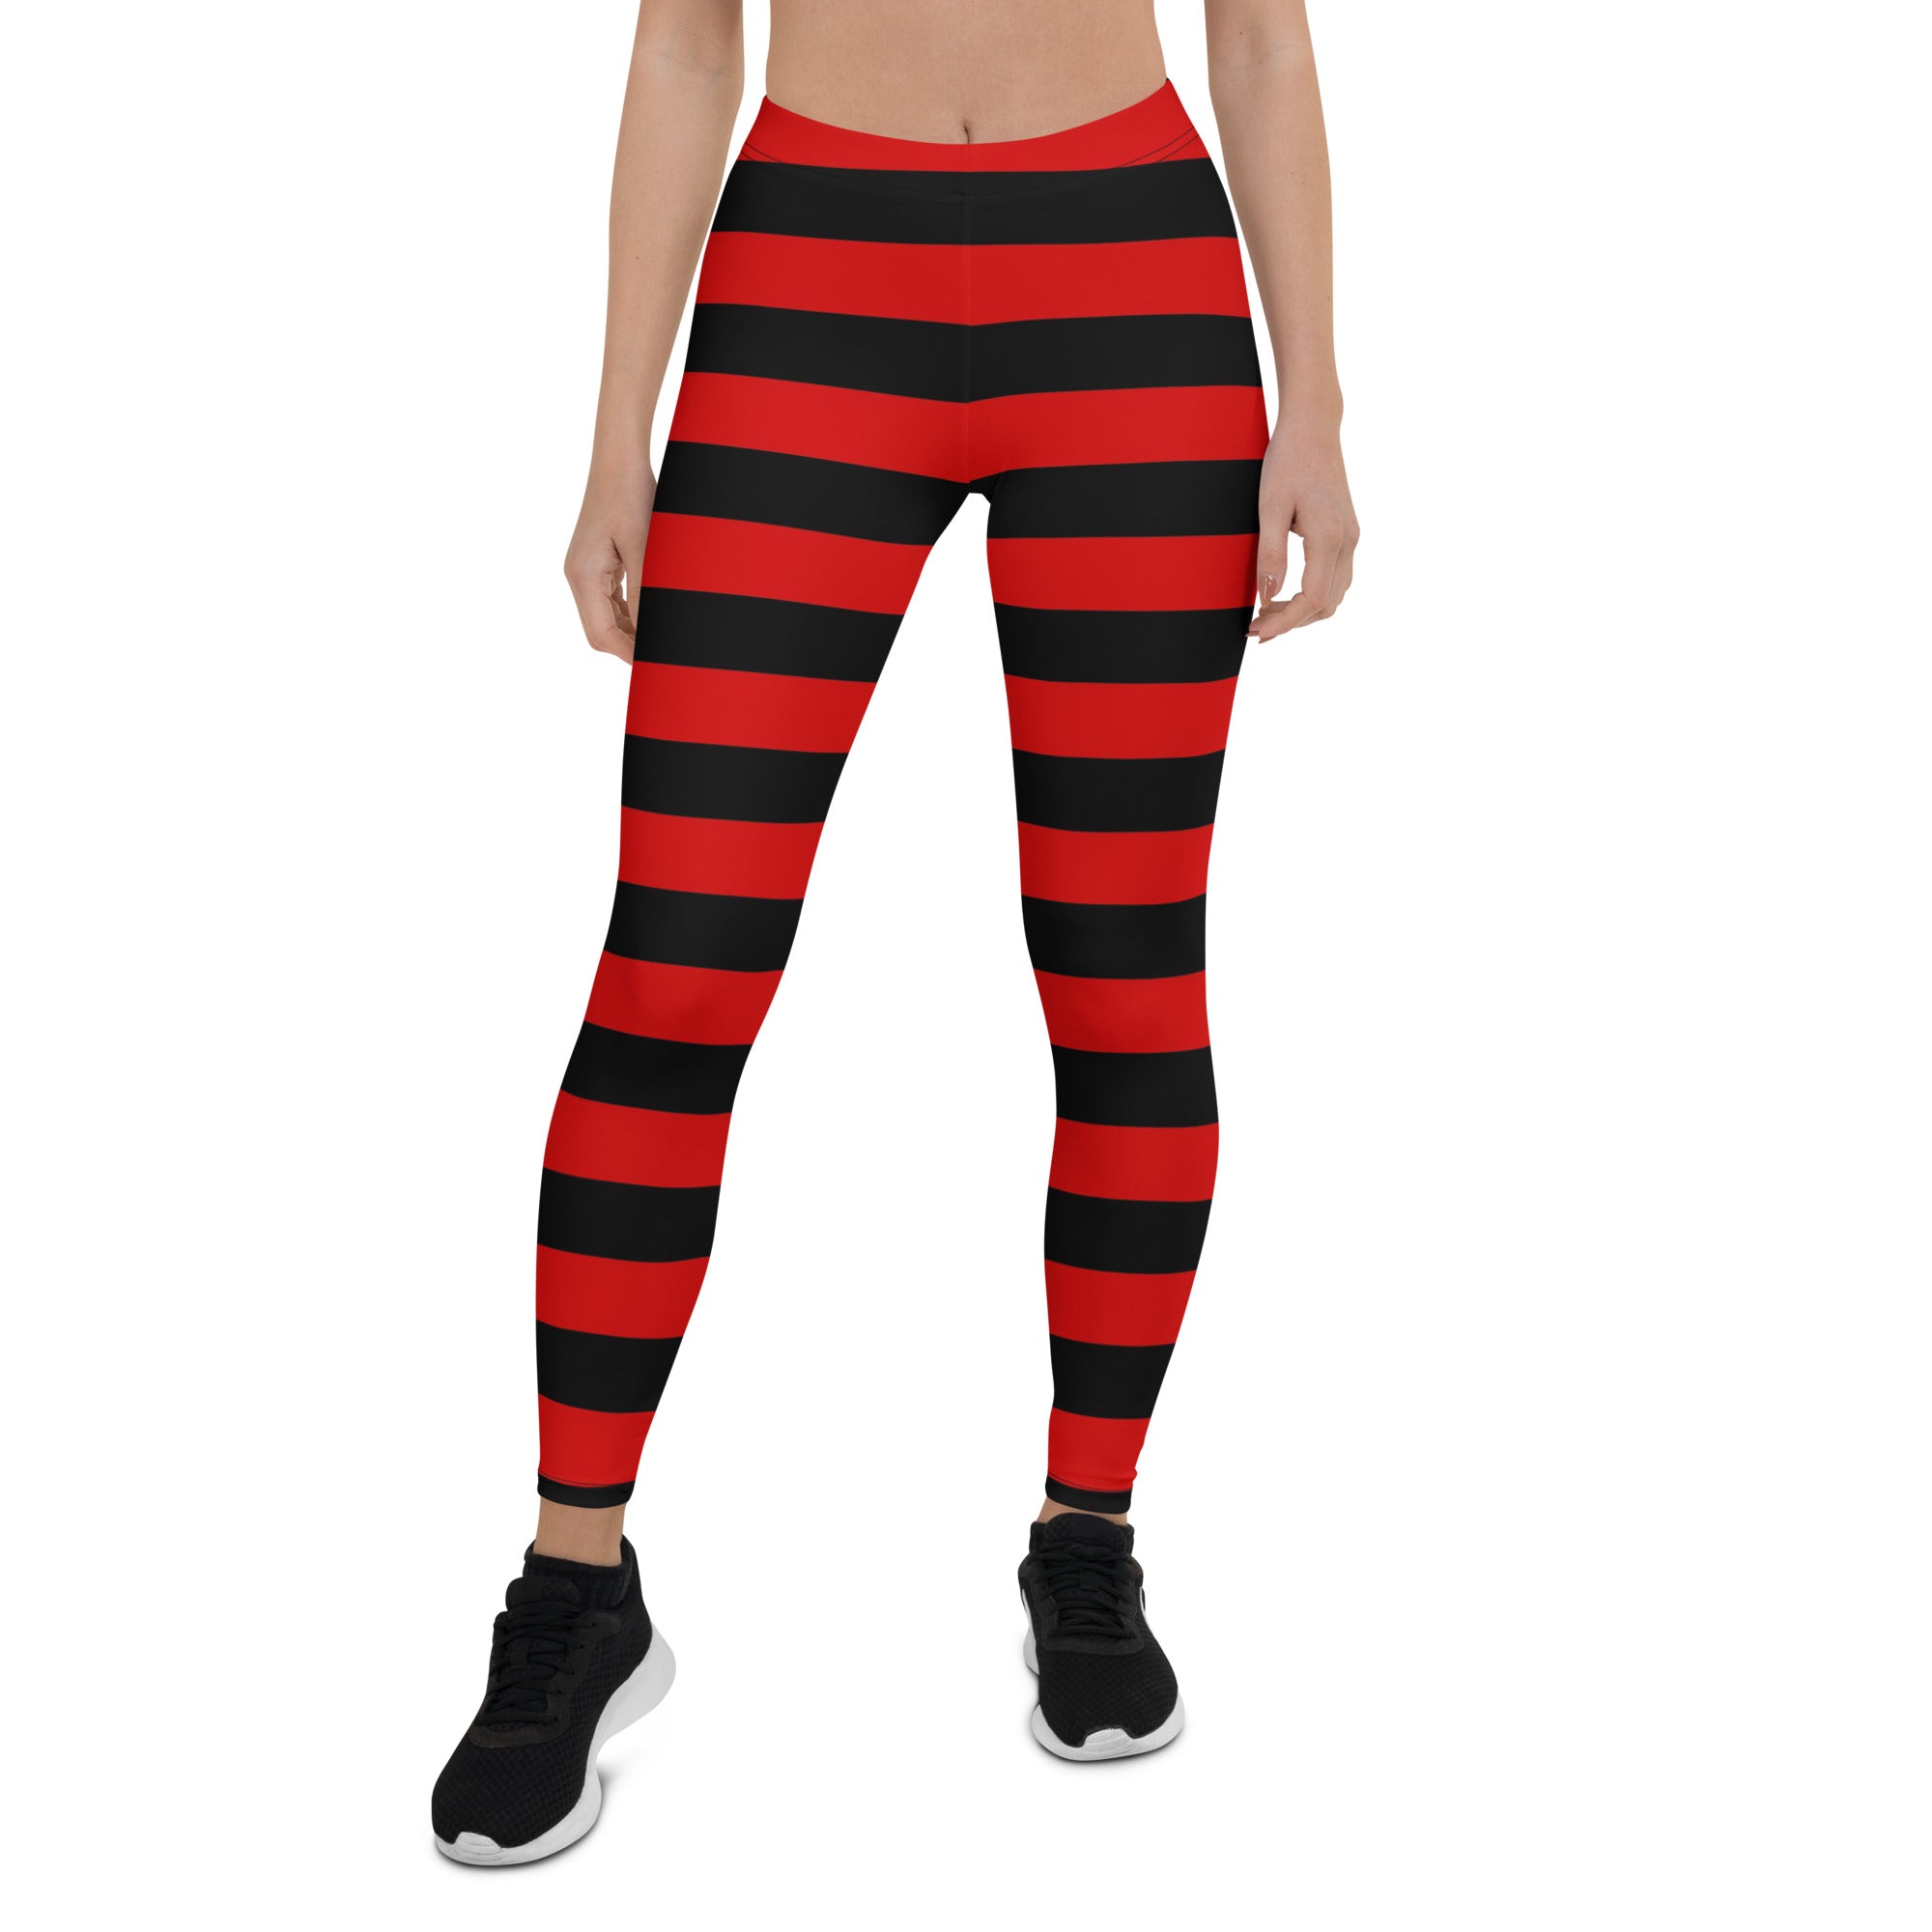 Lularoe Leggings - Stripes Chevron - Black Red White - L/XL